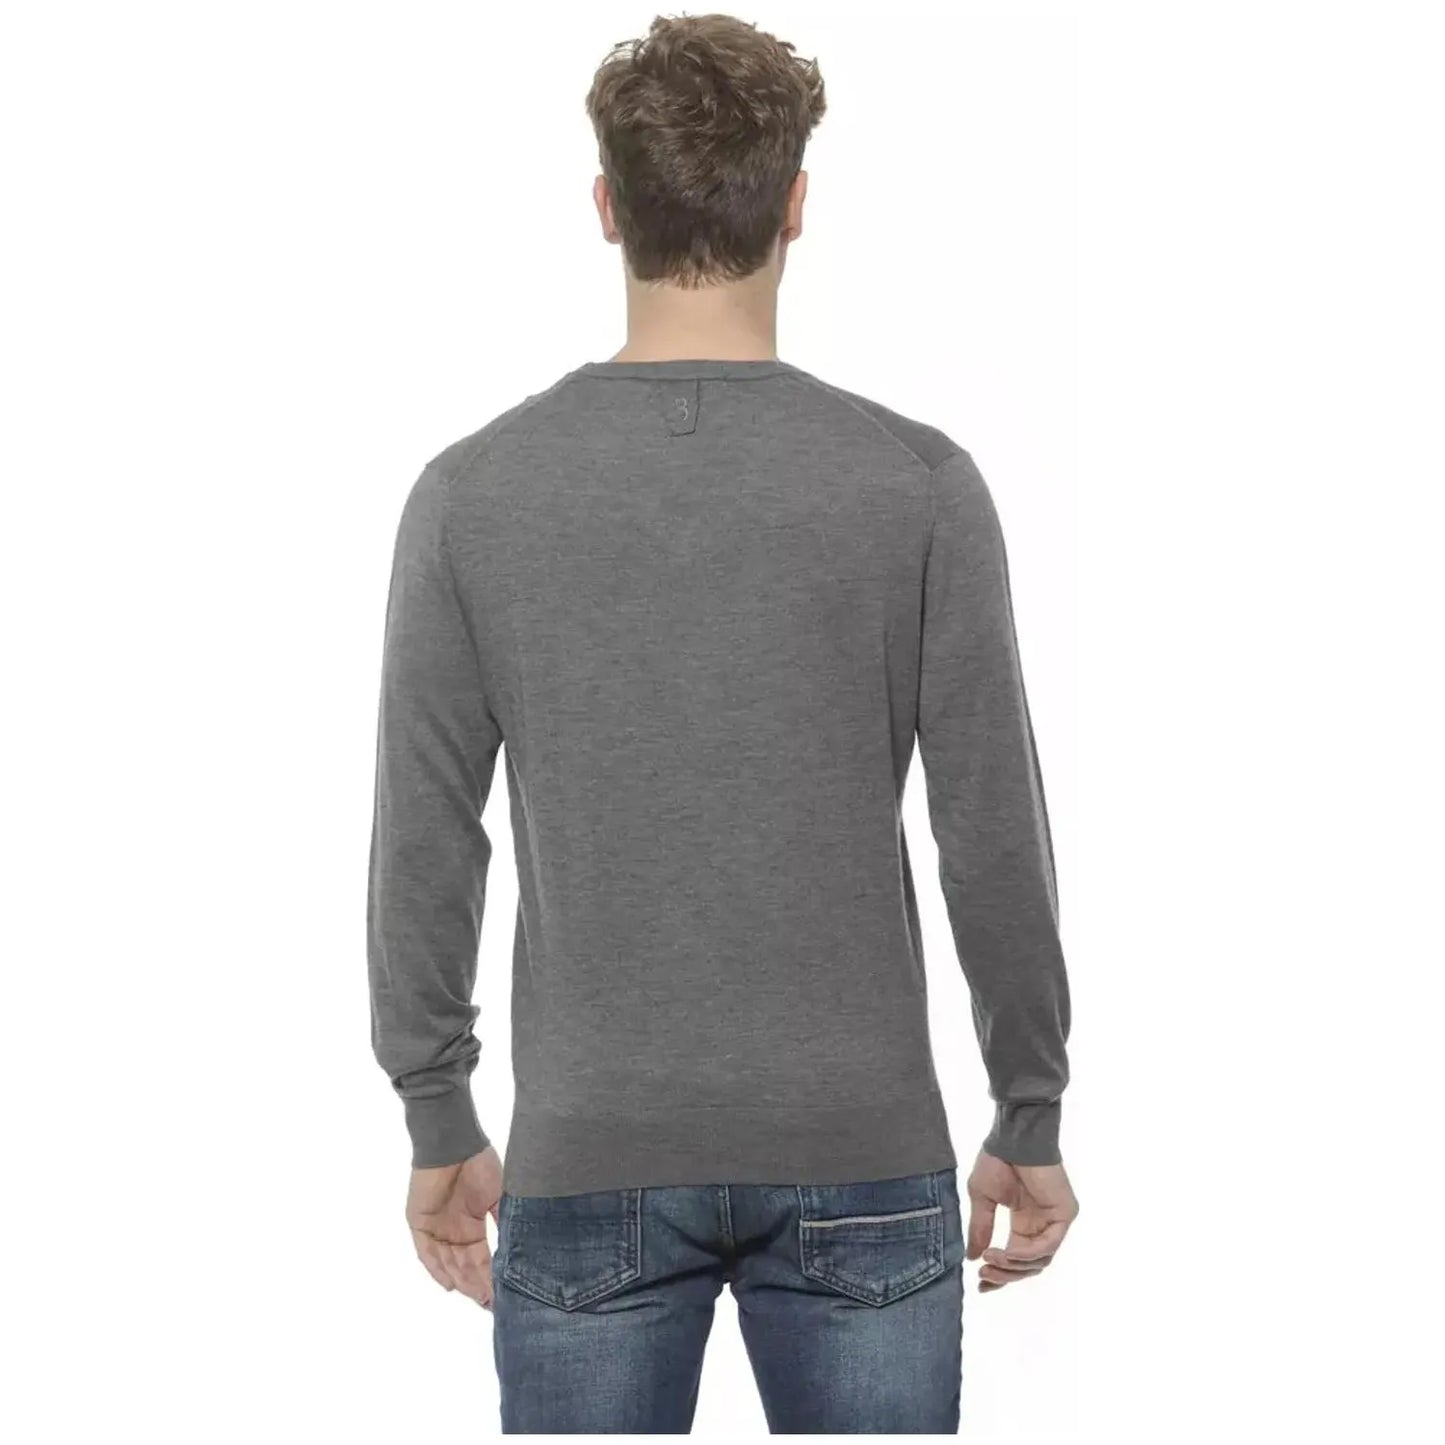 Billionaire Italian Couture Exquisite Cashmere V-Neck Mens Sweater grigio-grey-sweater-2